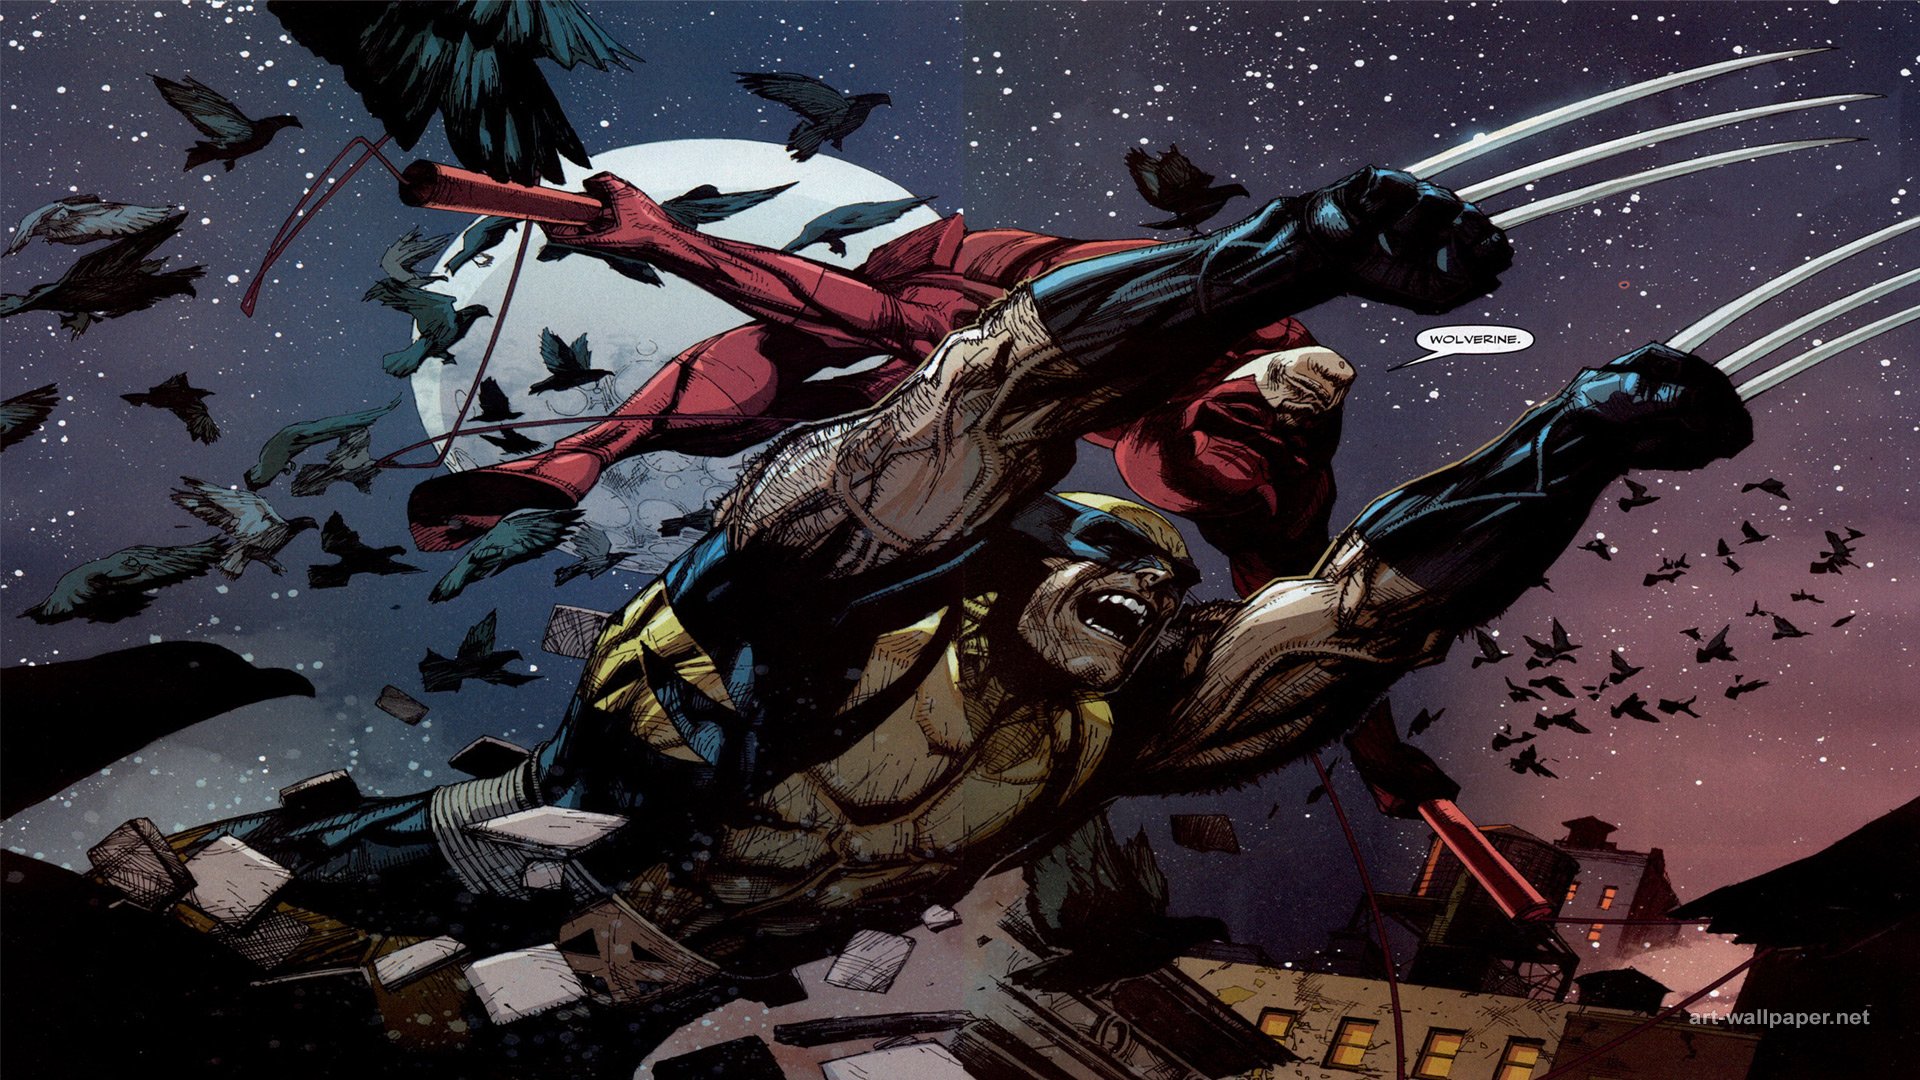 Wolverine and Daredevil